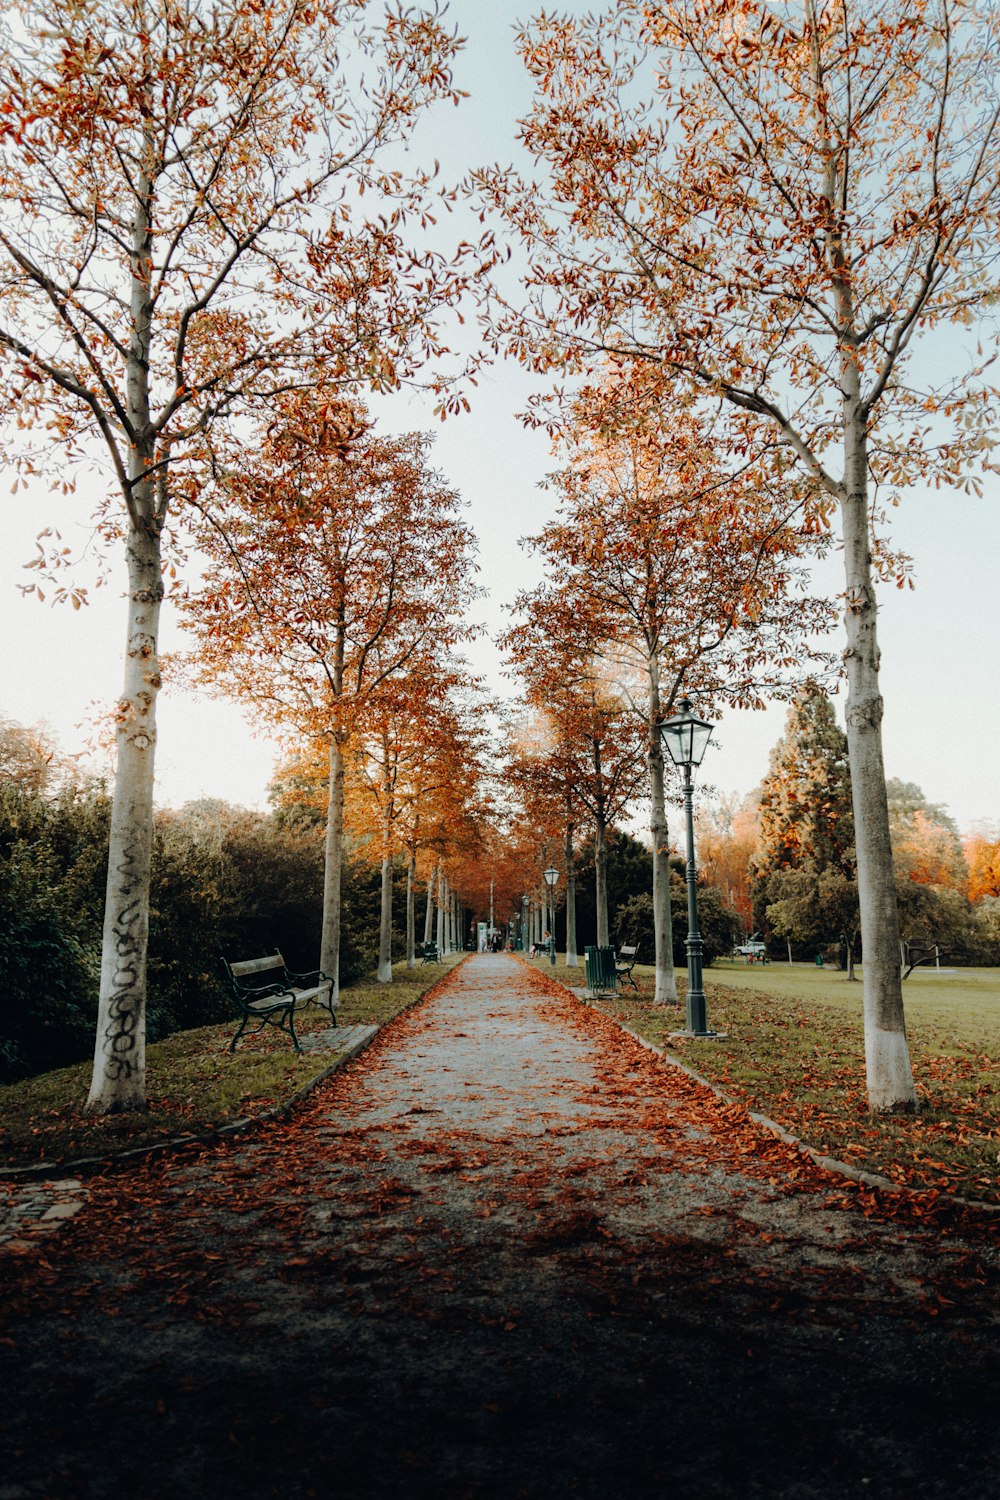 empty road between brown leafed trees